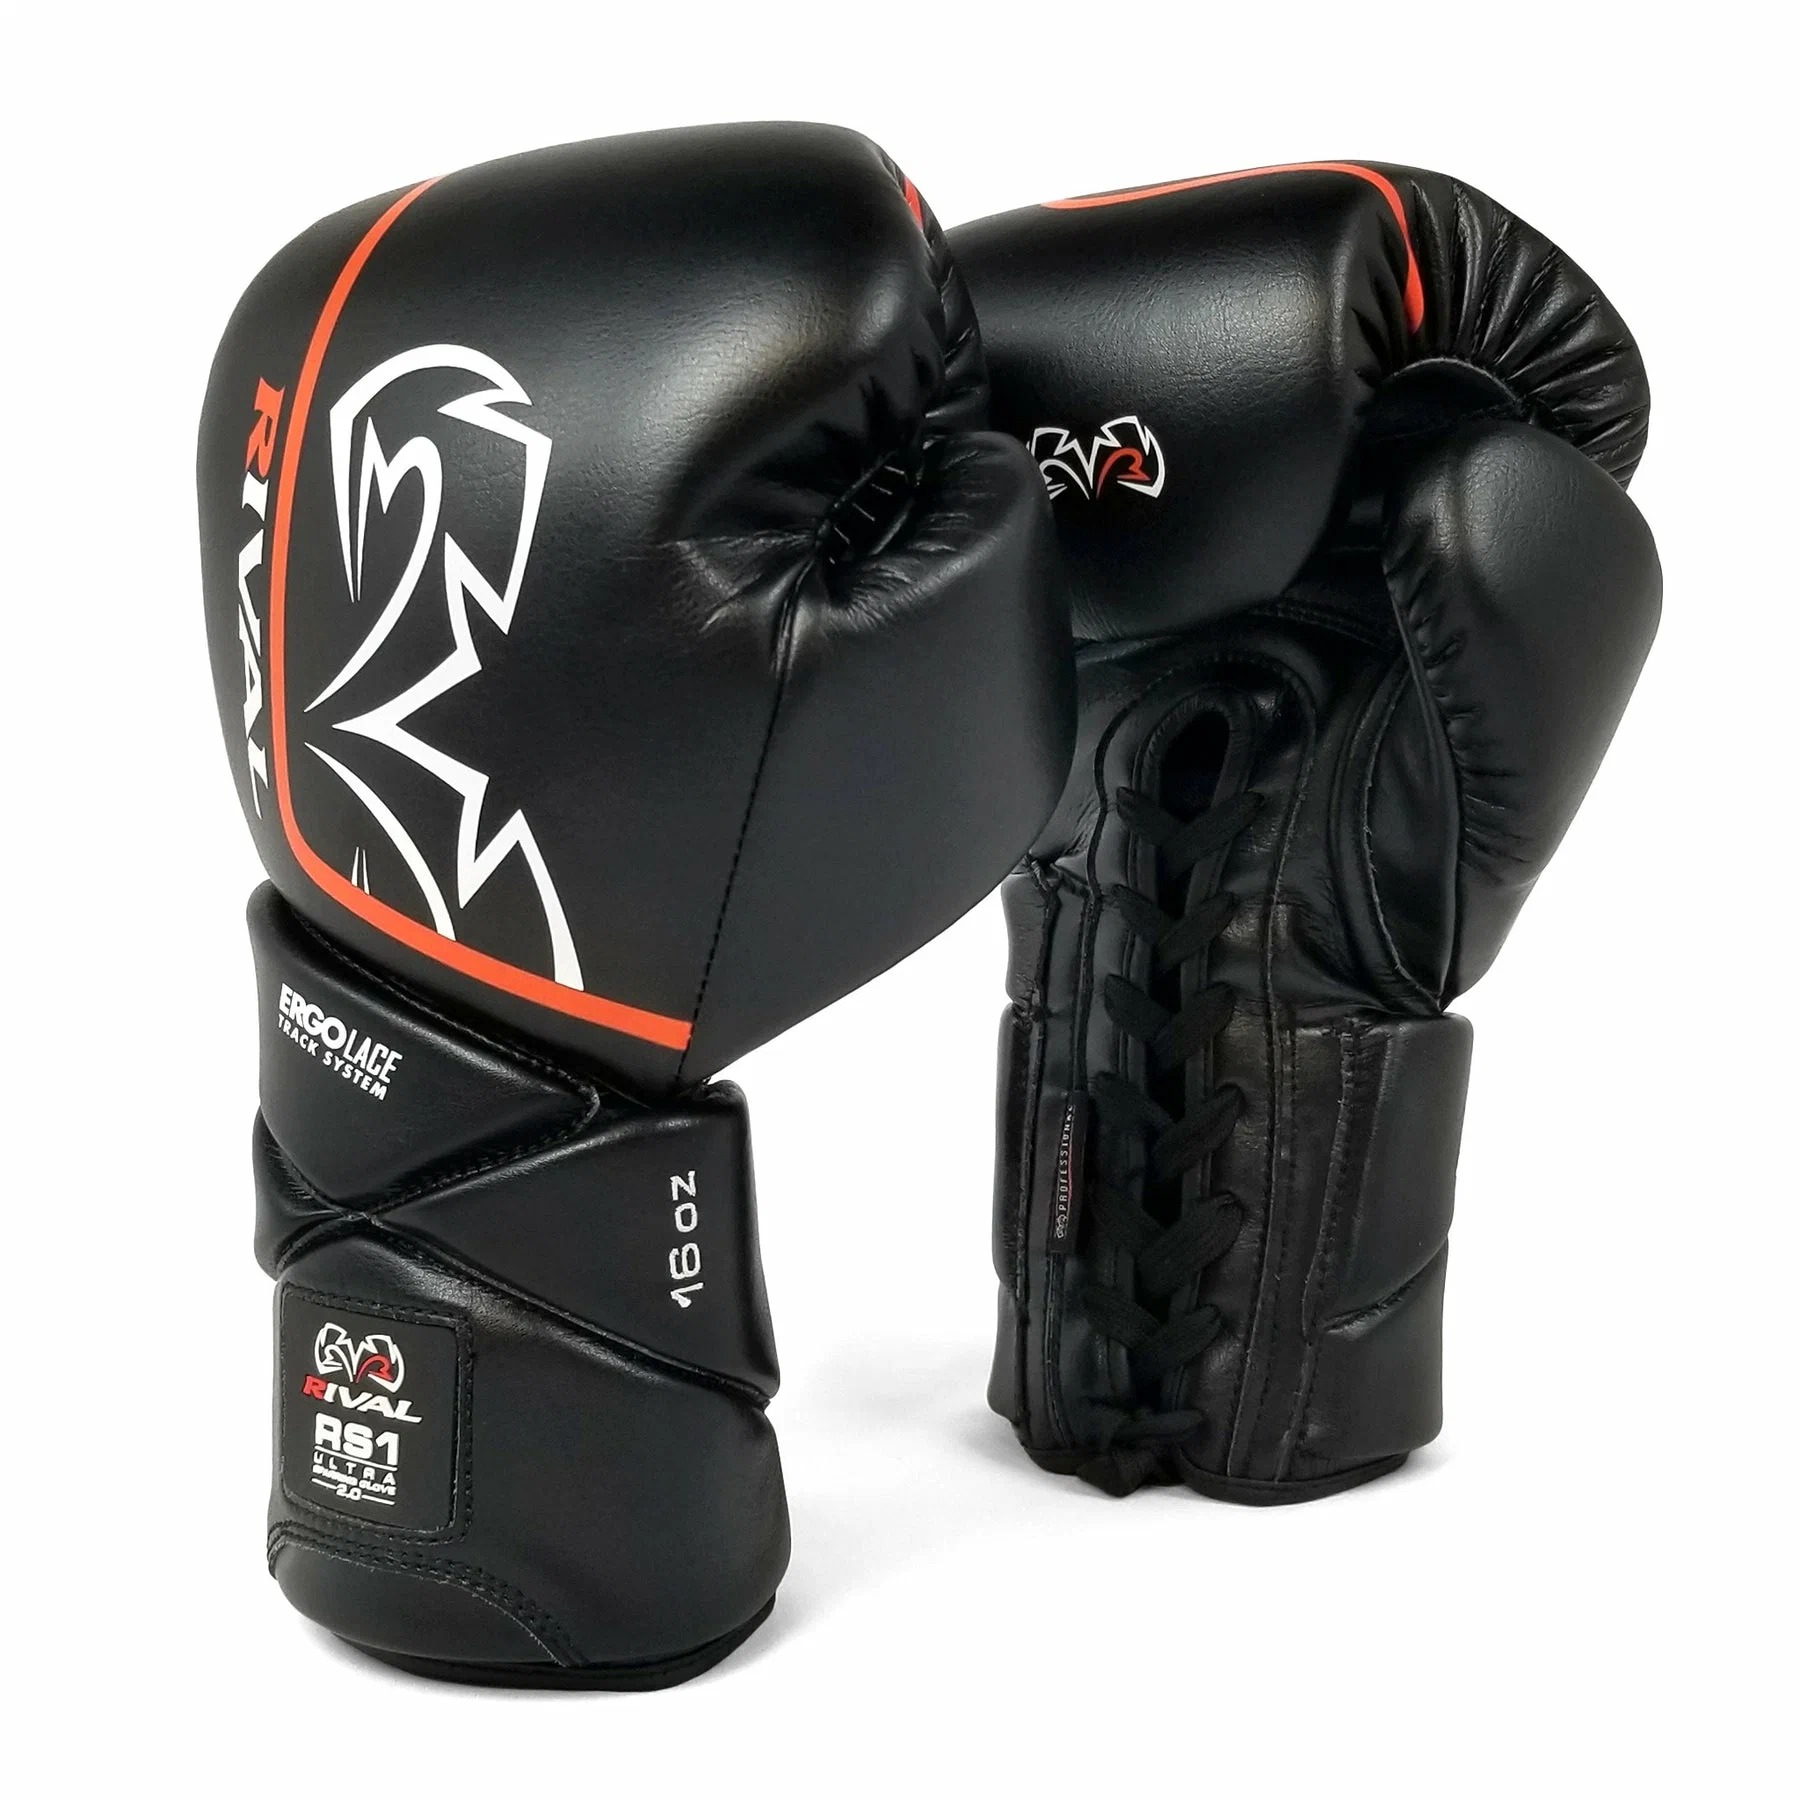 Боксерские перчатки Rival RS1 Black 16 oz